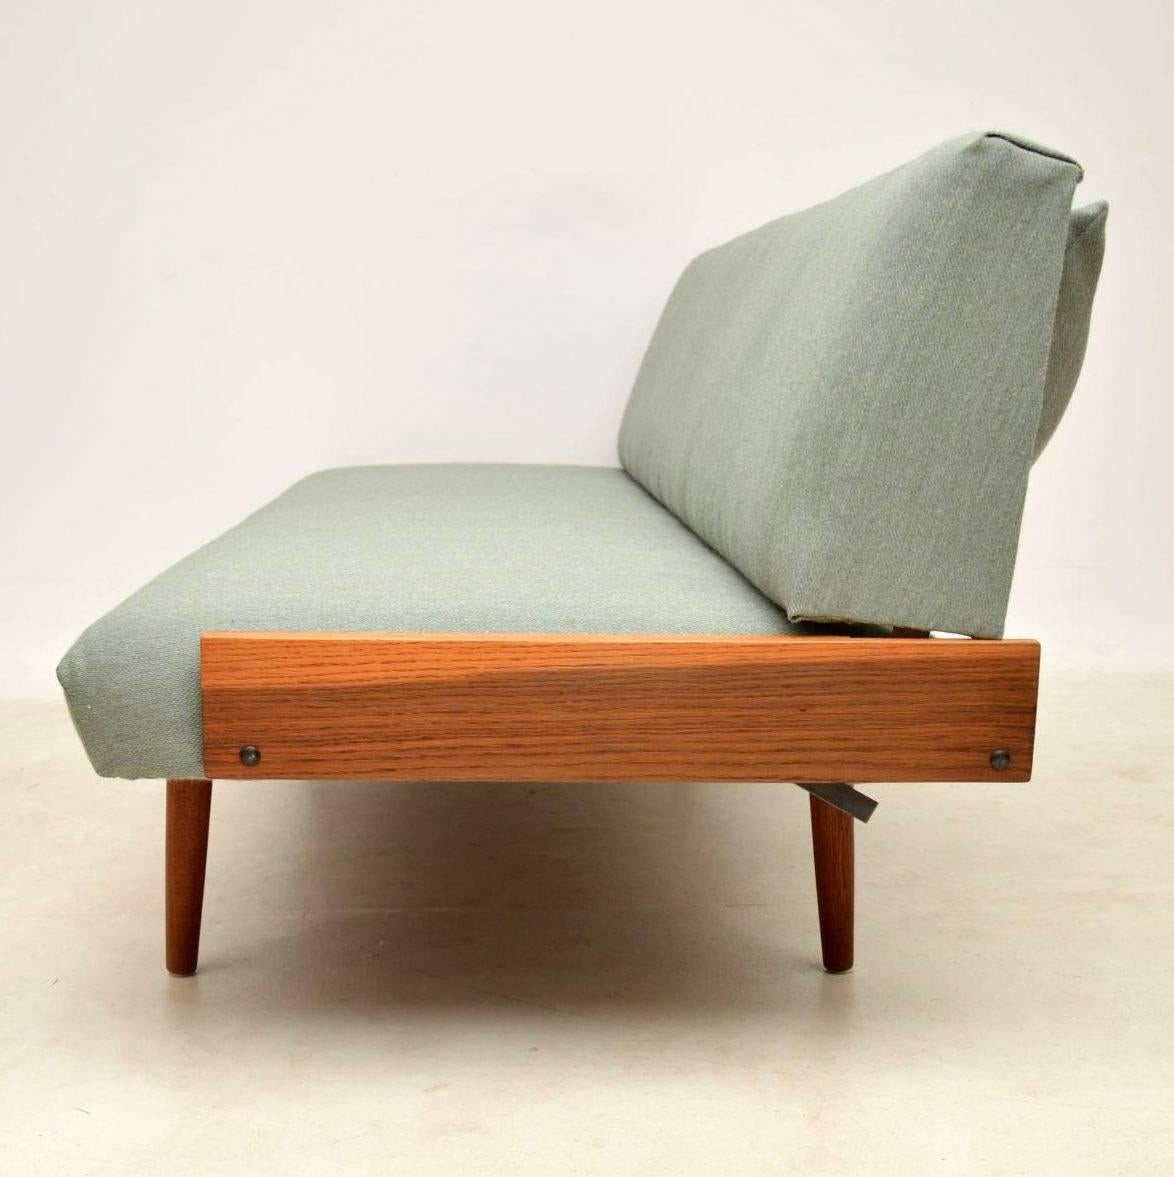 Wood 1950s Vintage Danish Sofa Bed